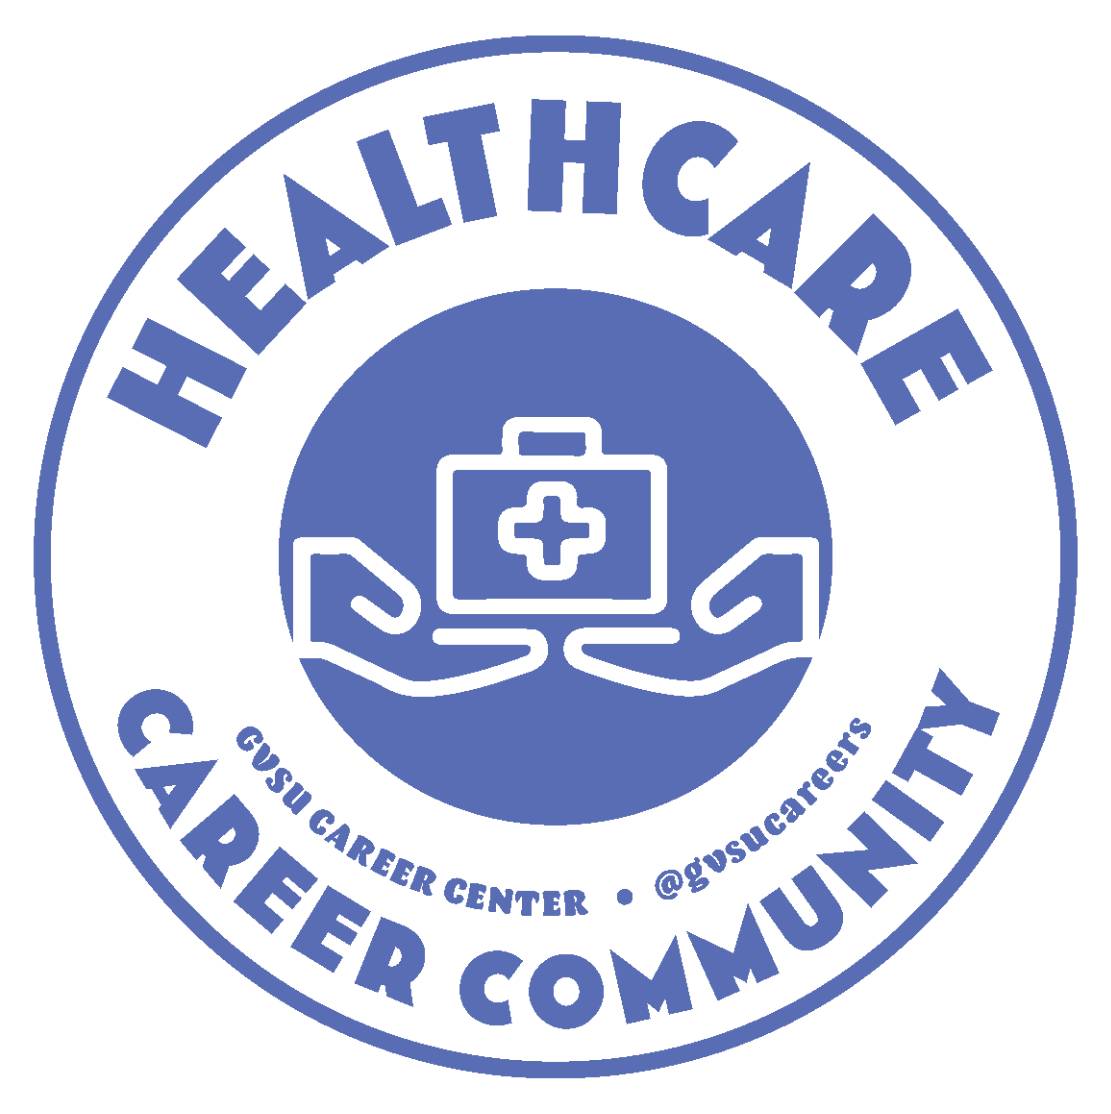 healthcare career community logo